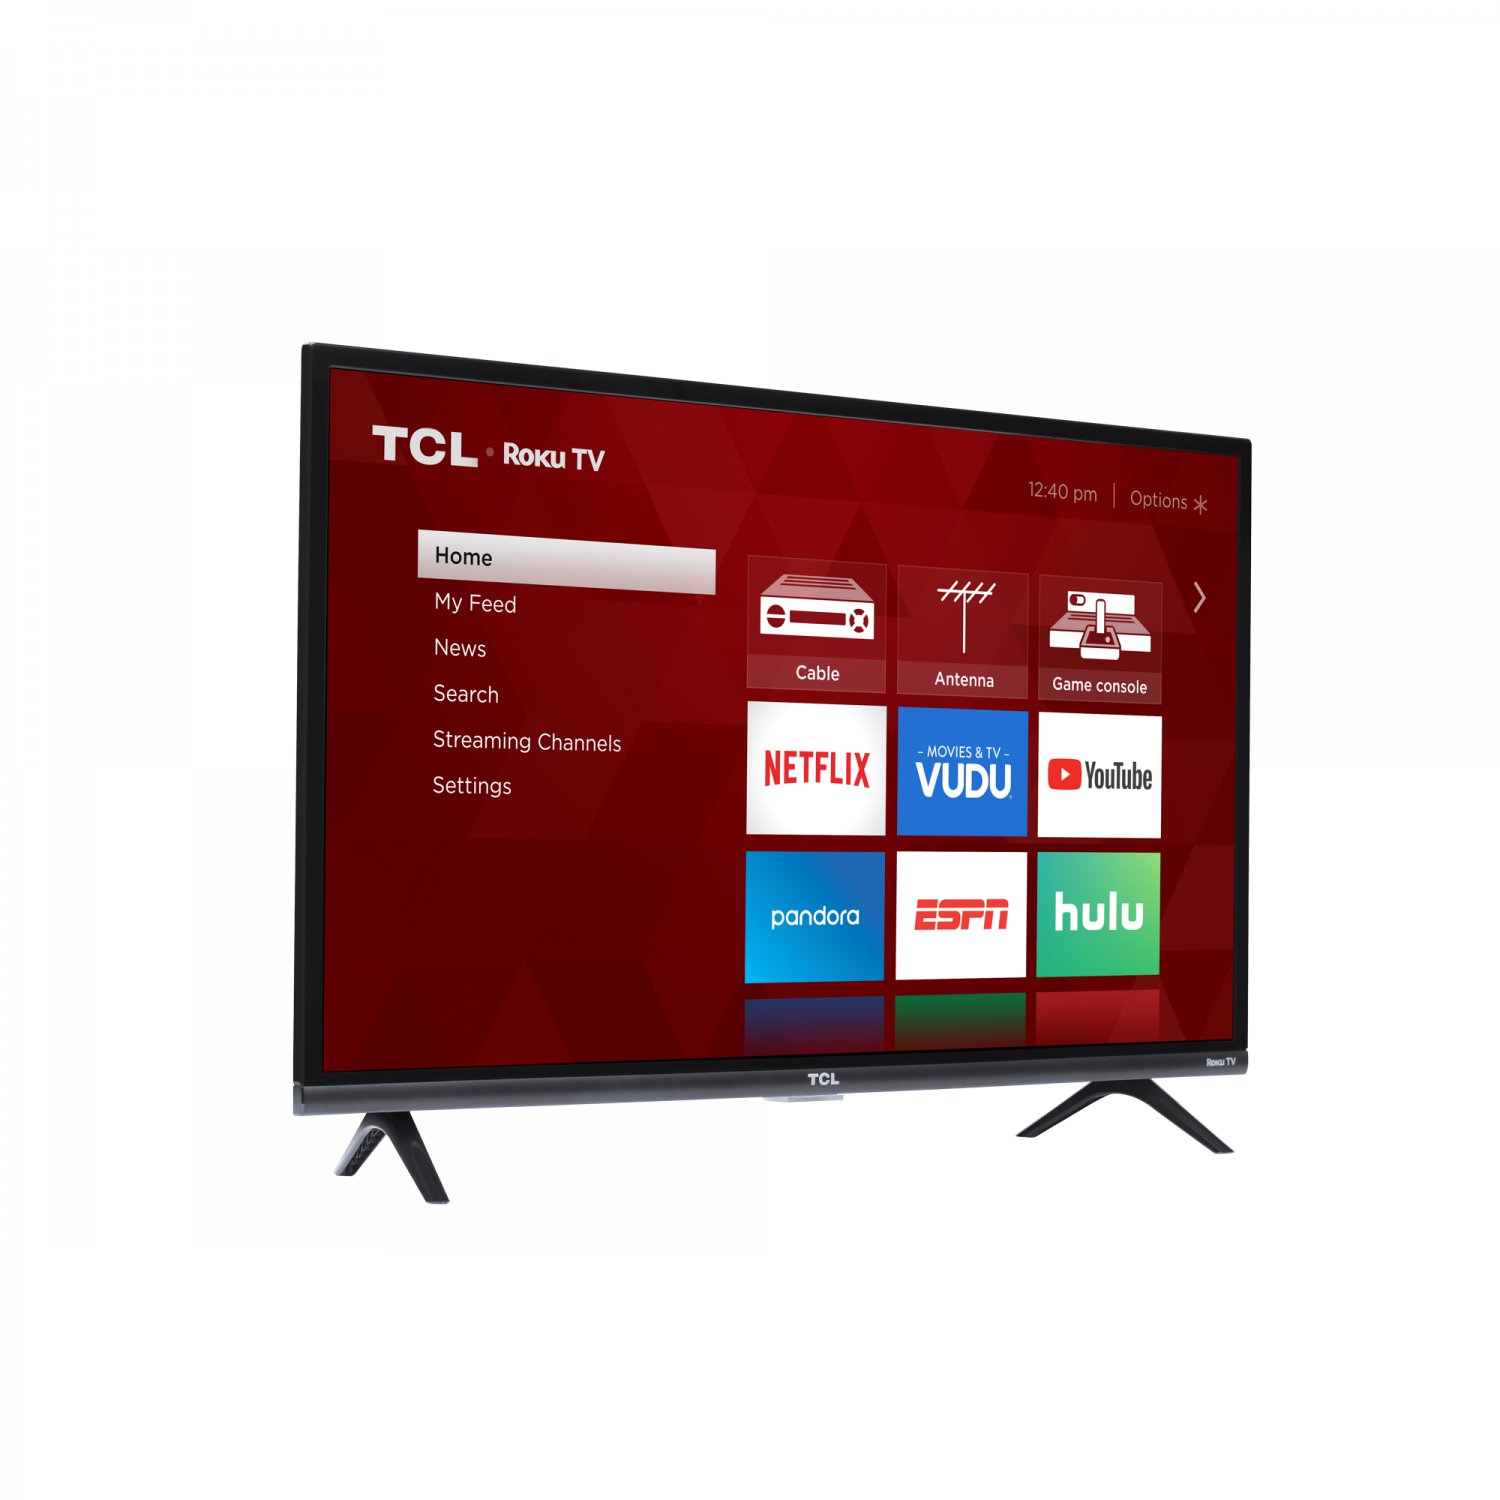 TCL 32" Class 1080P FHD LED Roku Smart TV 3 Series 32S327